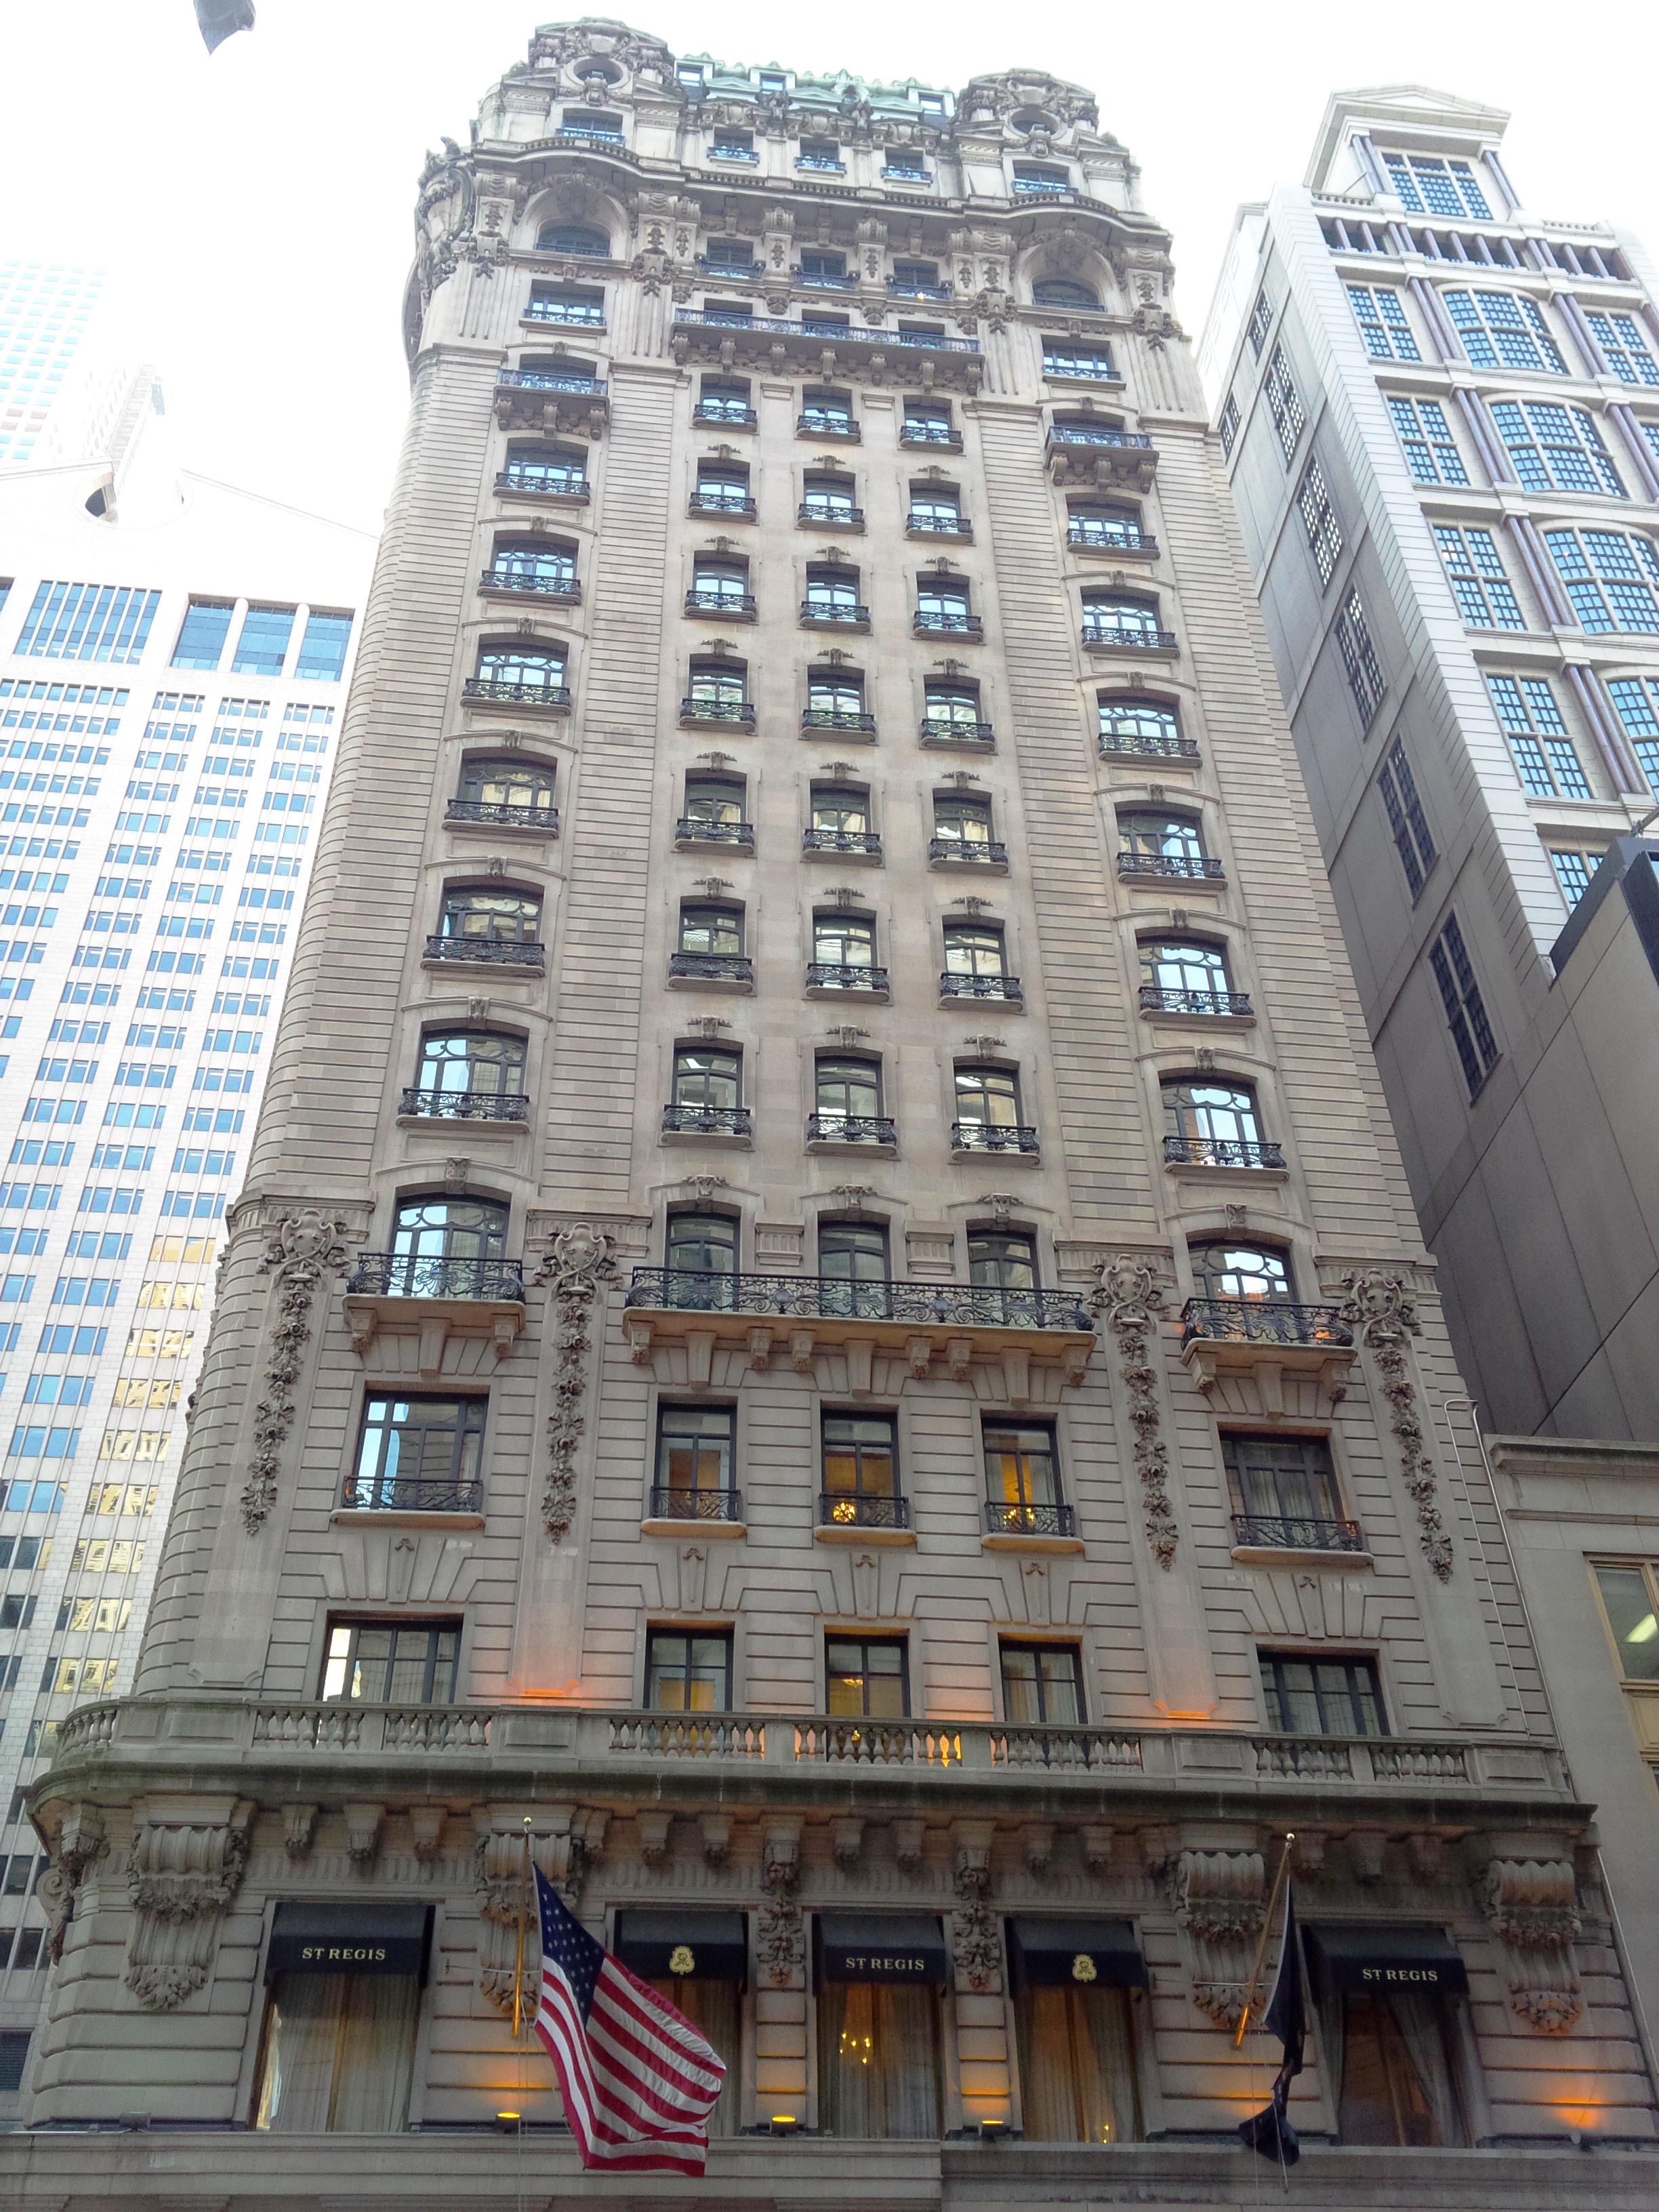 The hotel's Fifth Avenue façade in 2015